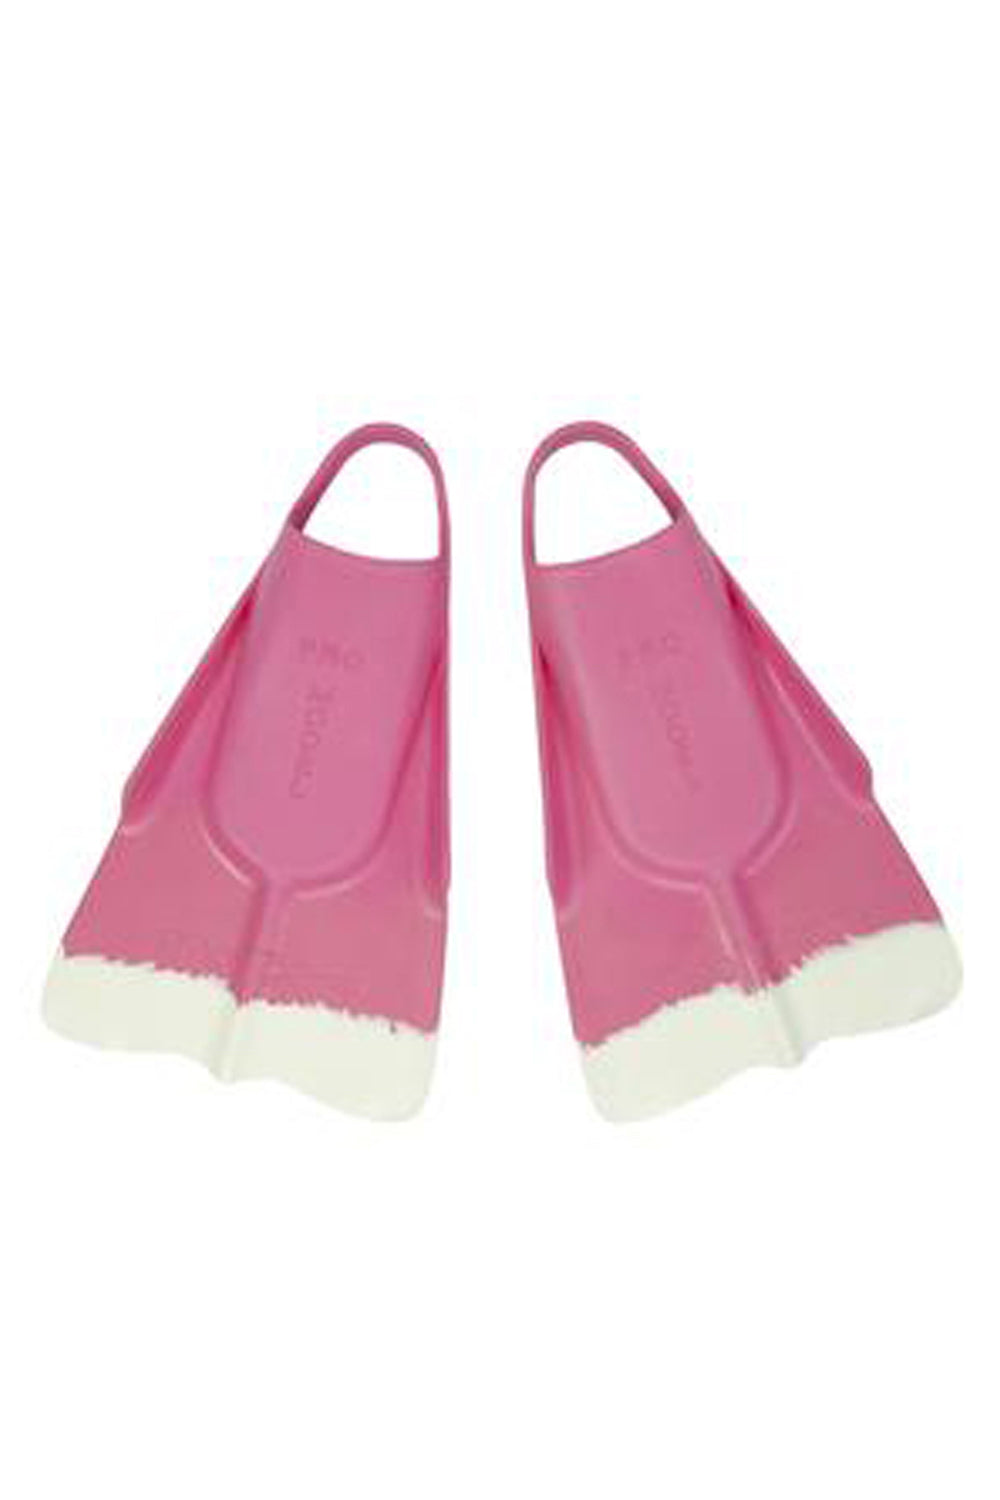 Da Fin Swimfins Flippers - Pink / White